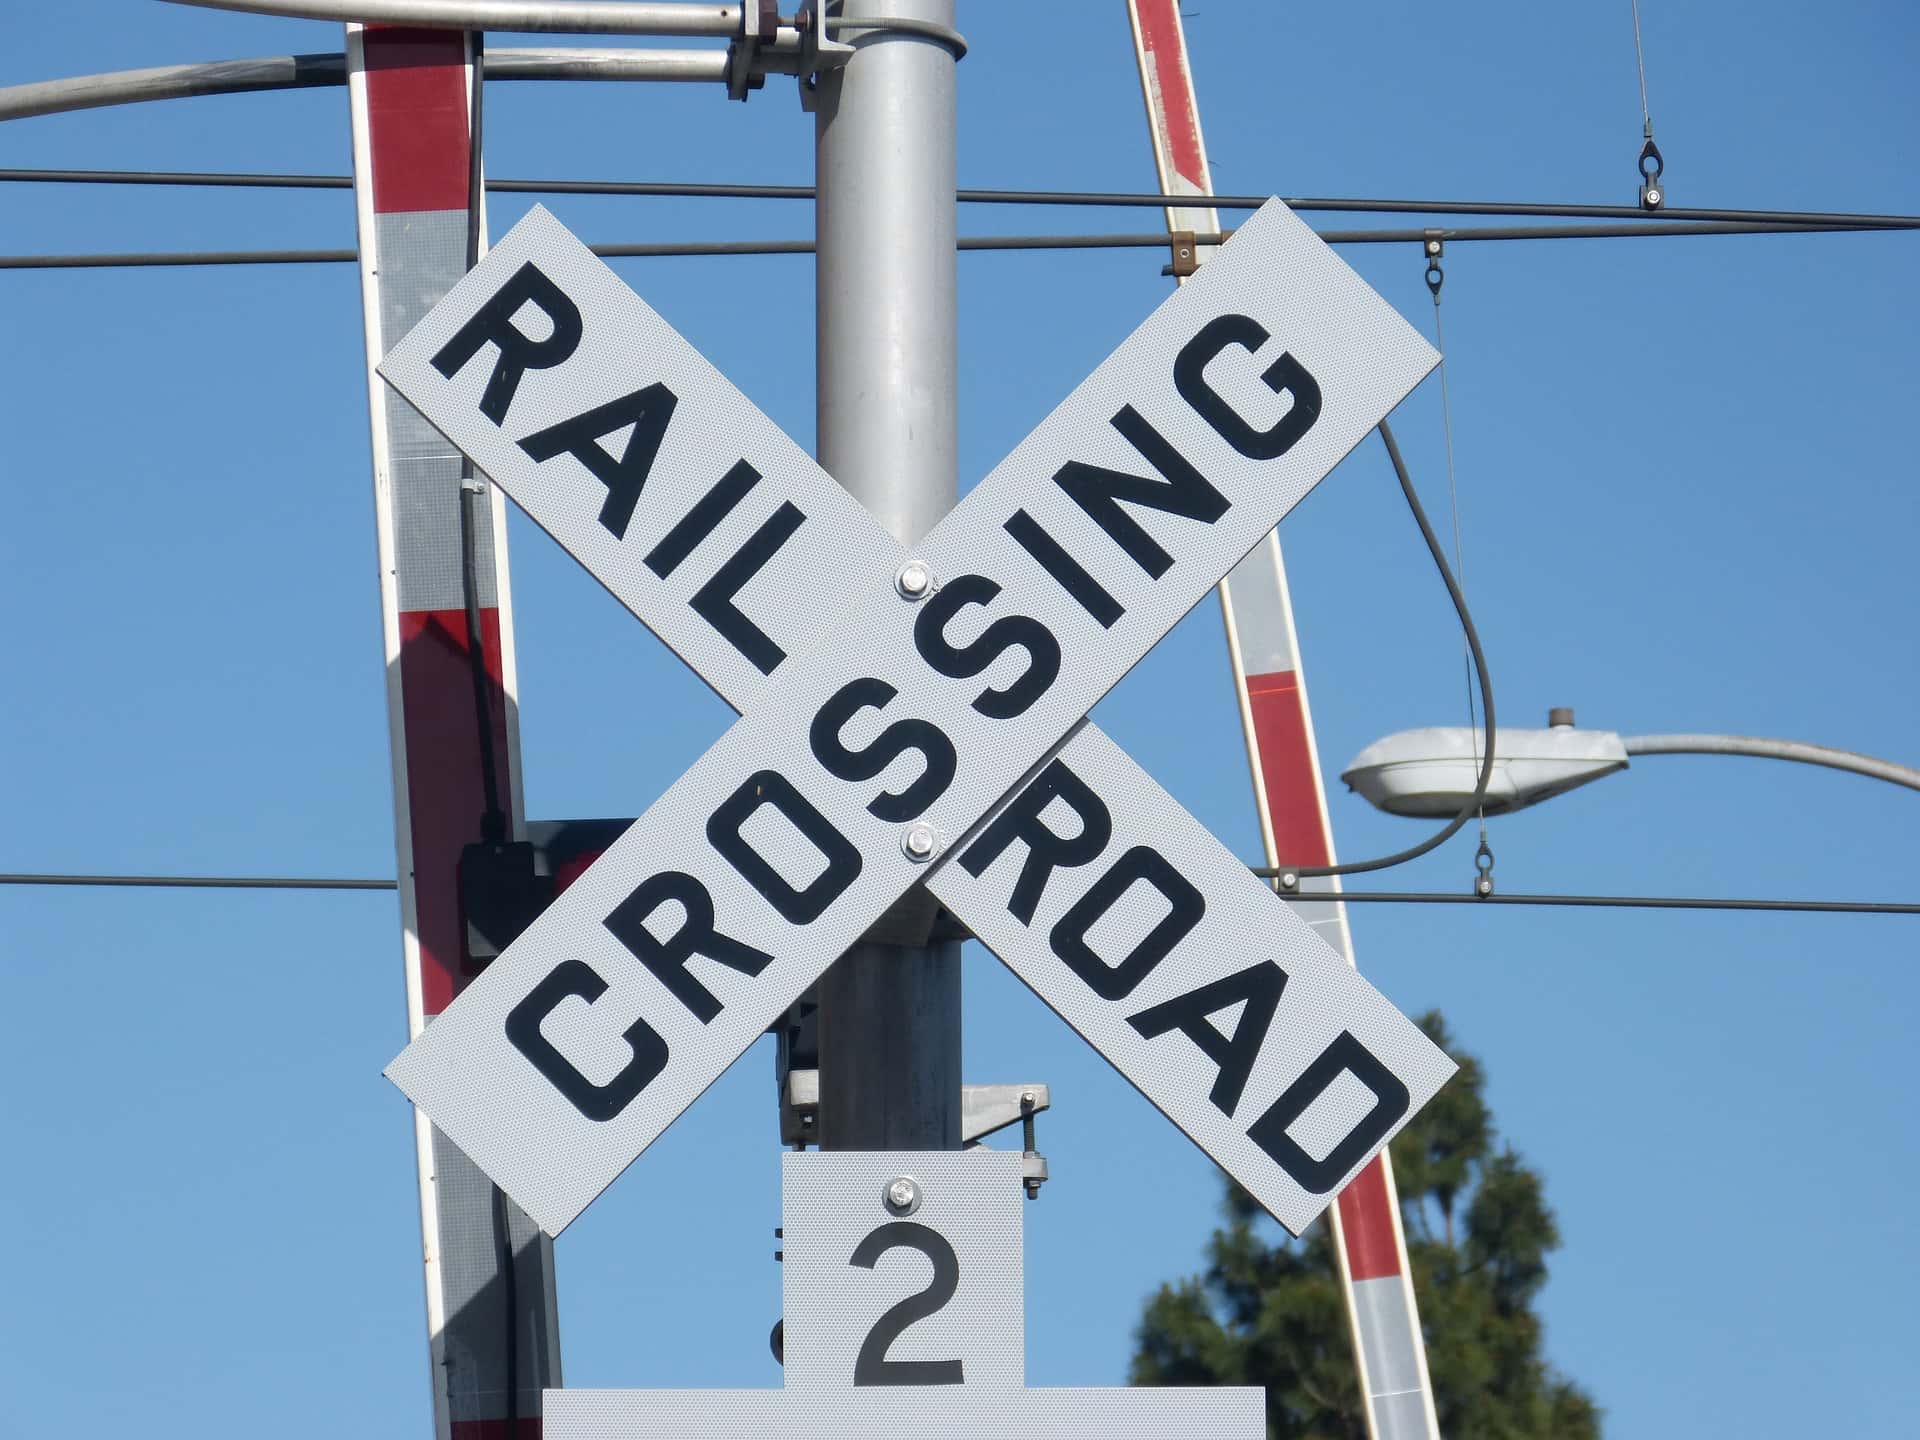 Railroad crossing gate lights train track railroads trains transportation freight